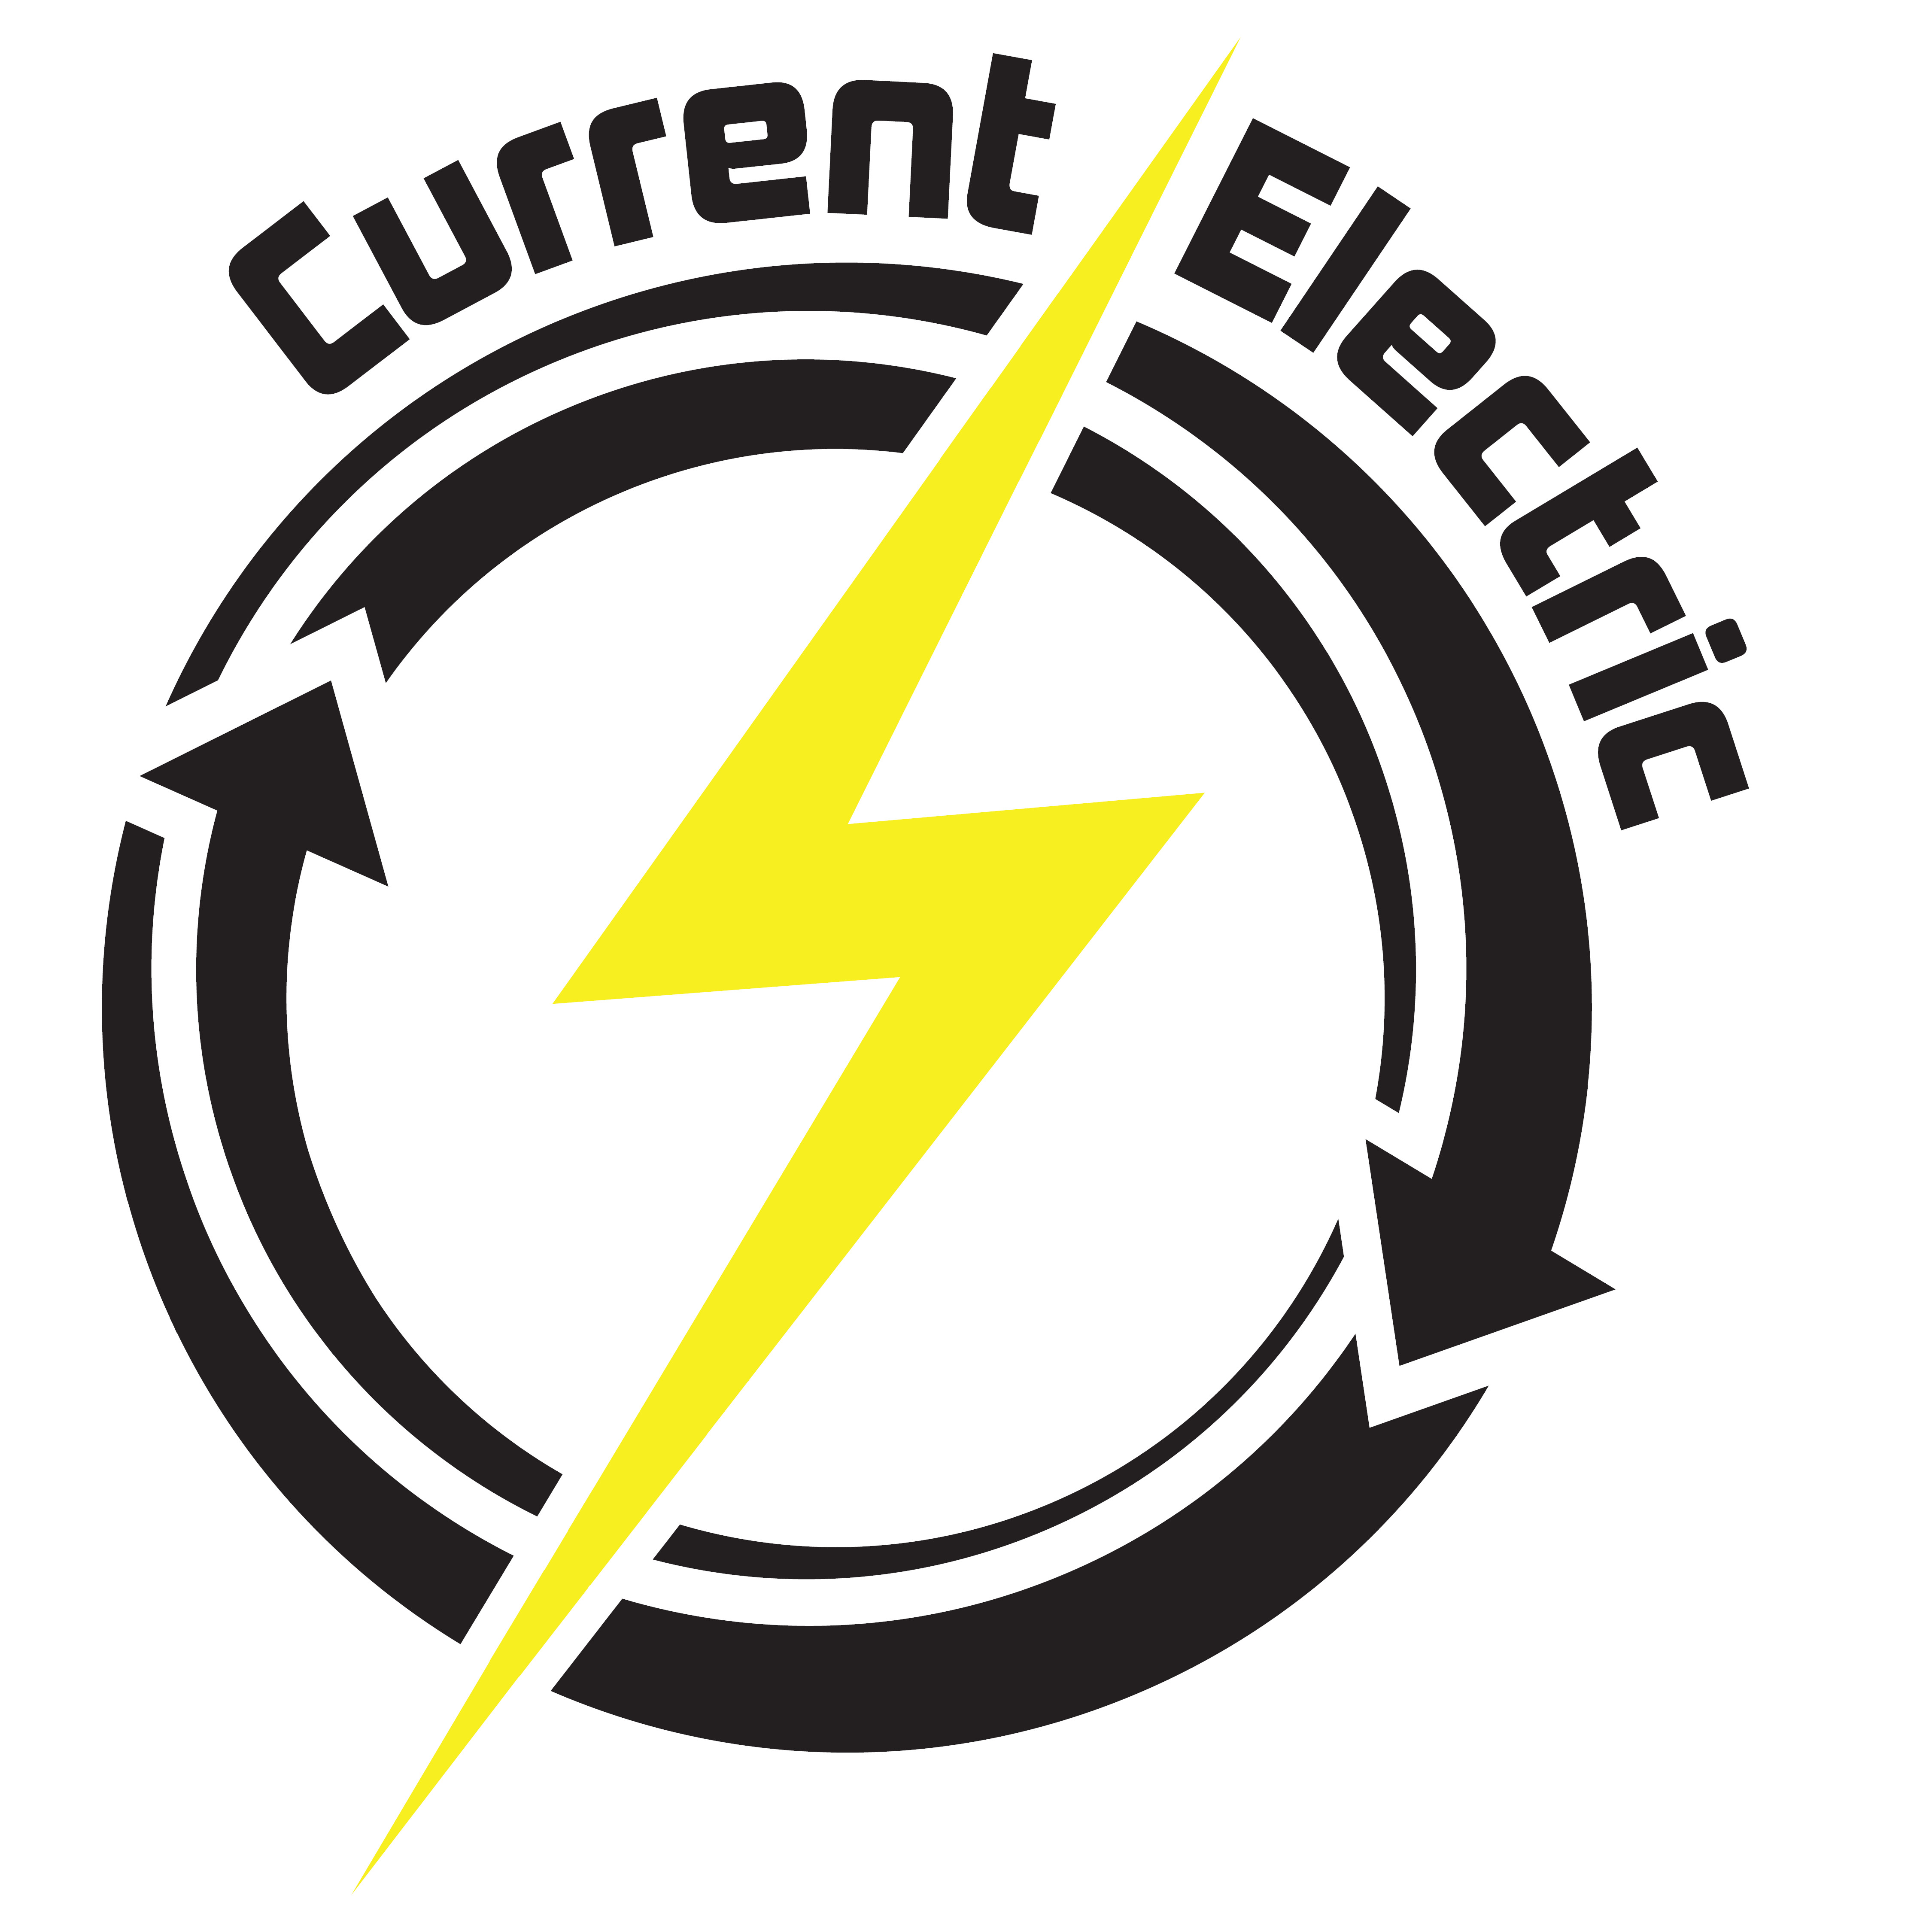 Current Electric, Inc. Logo